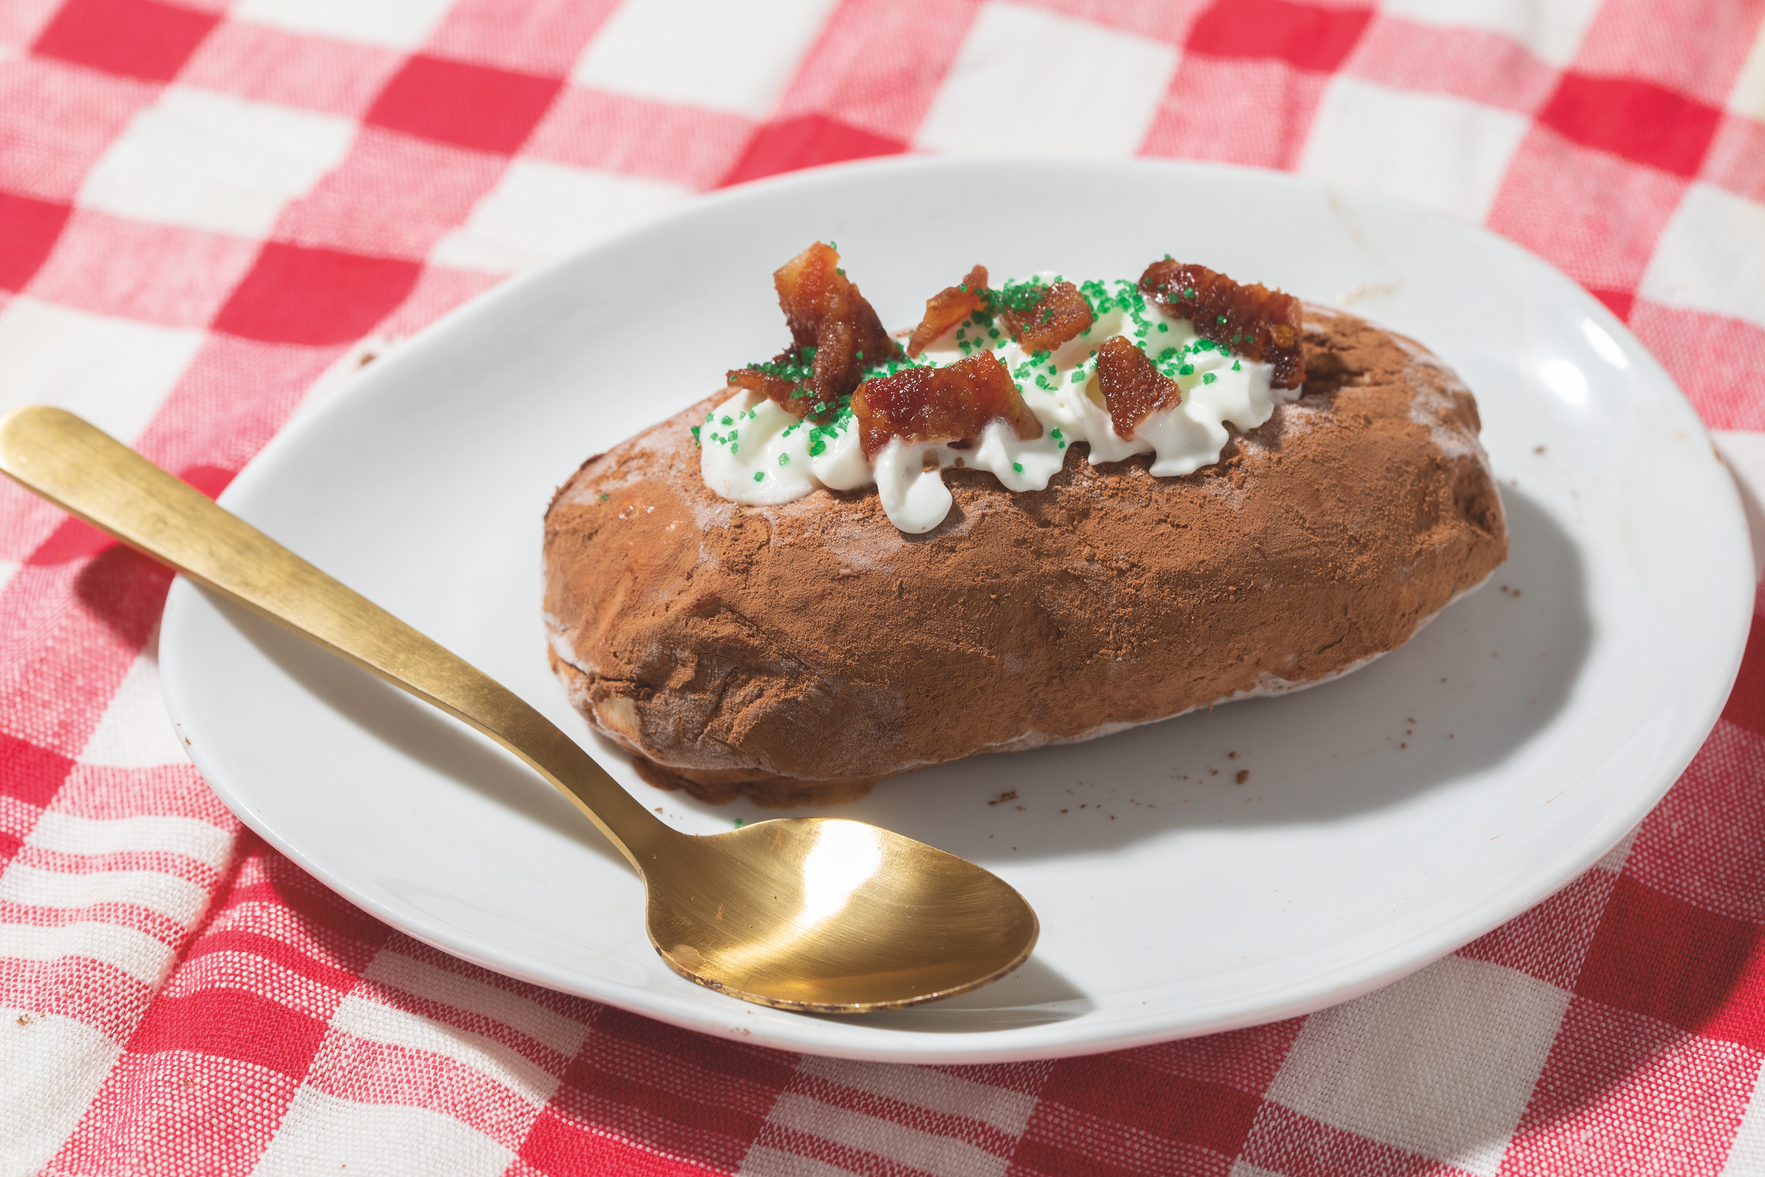 Capri S. Cafaro’s Ice Cream “Baked Potato” with Candied Bacon